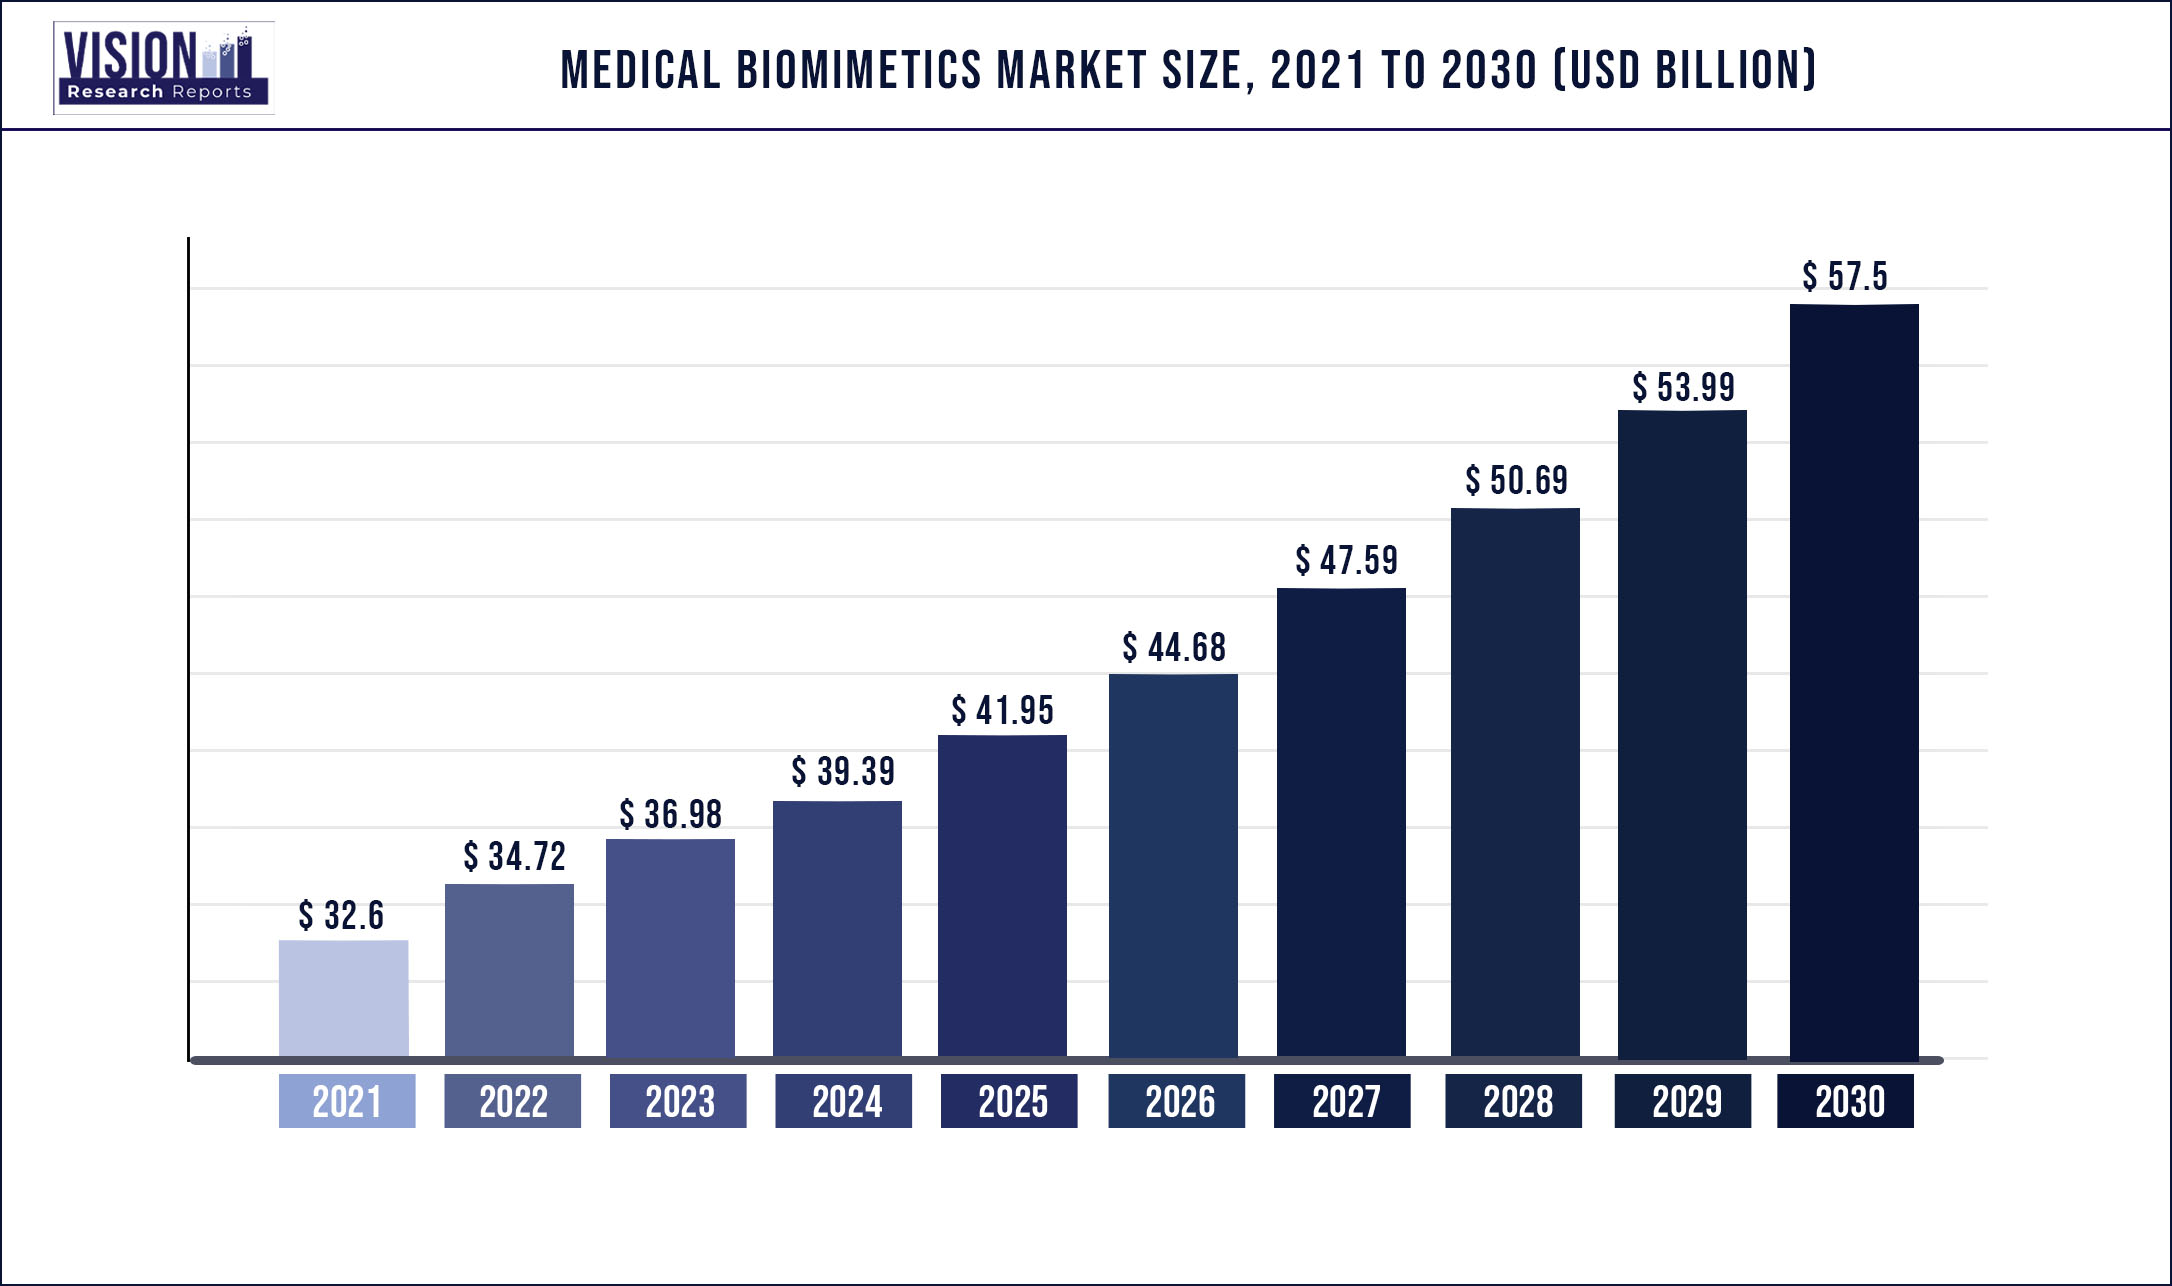 Medical Biomimetics Market Size 2021 to 2030